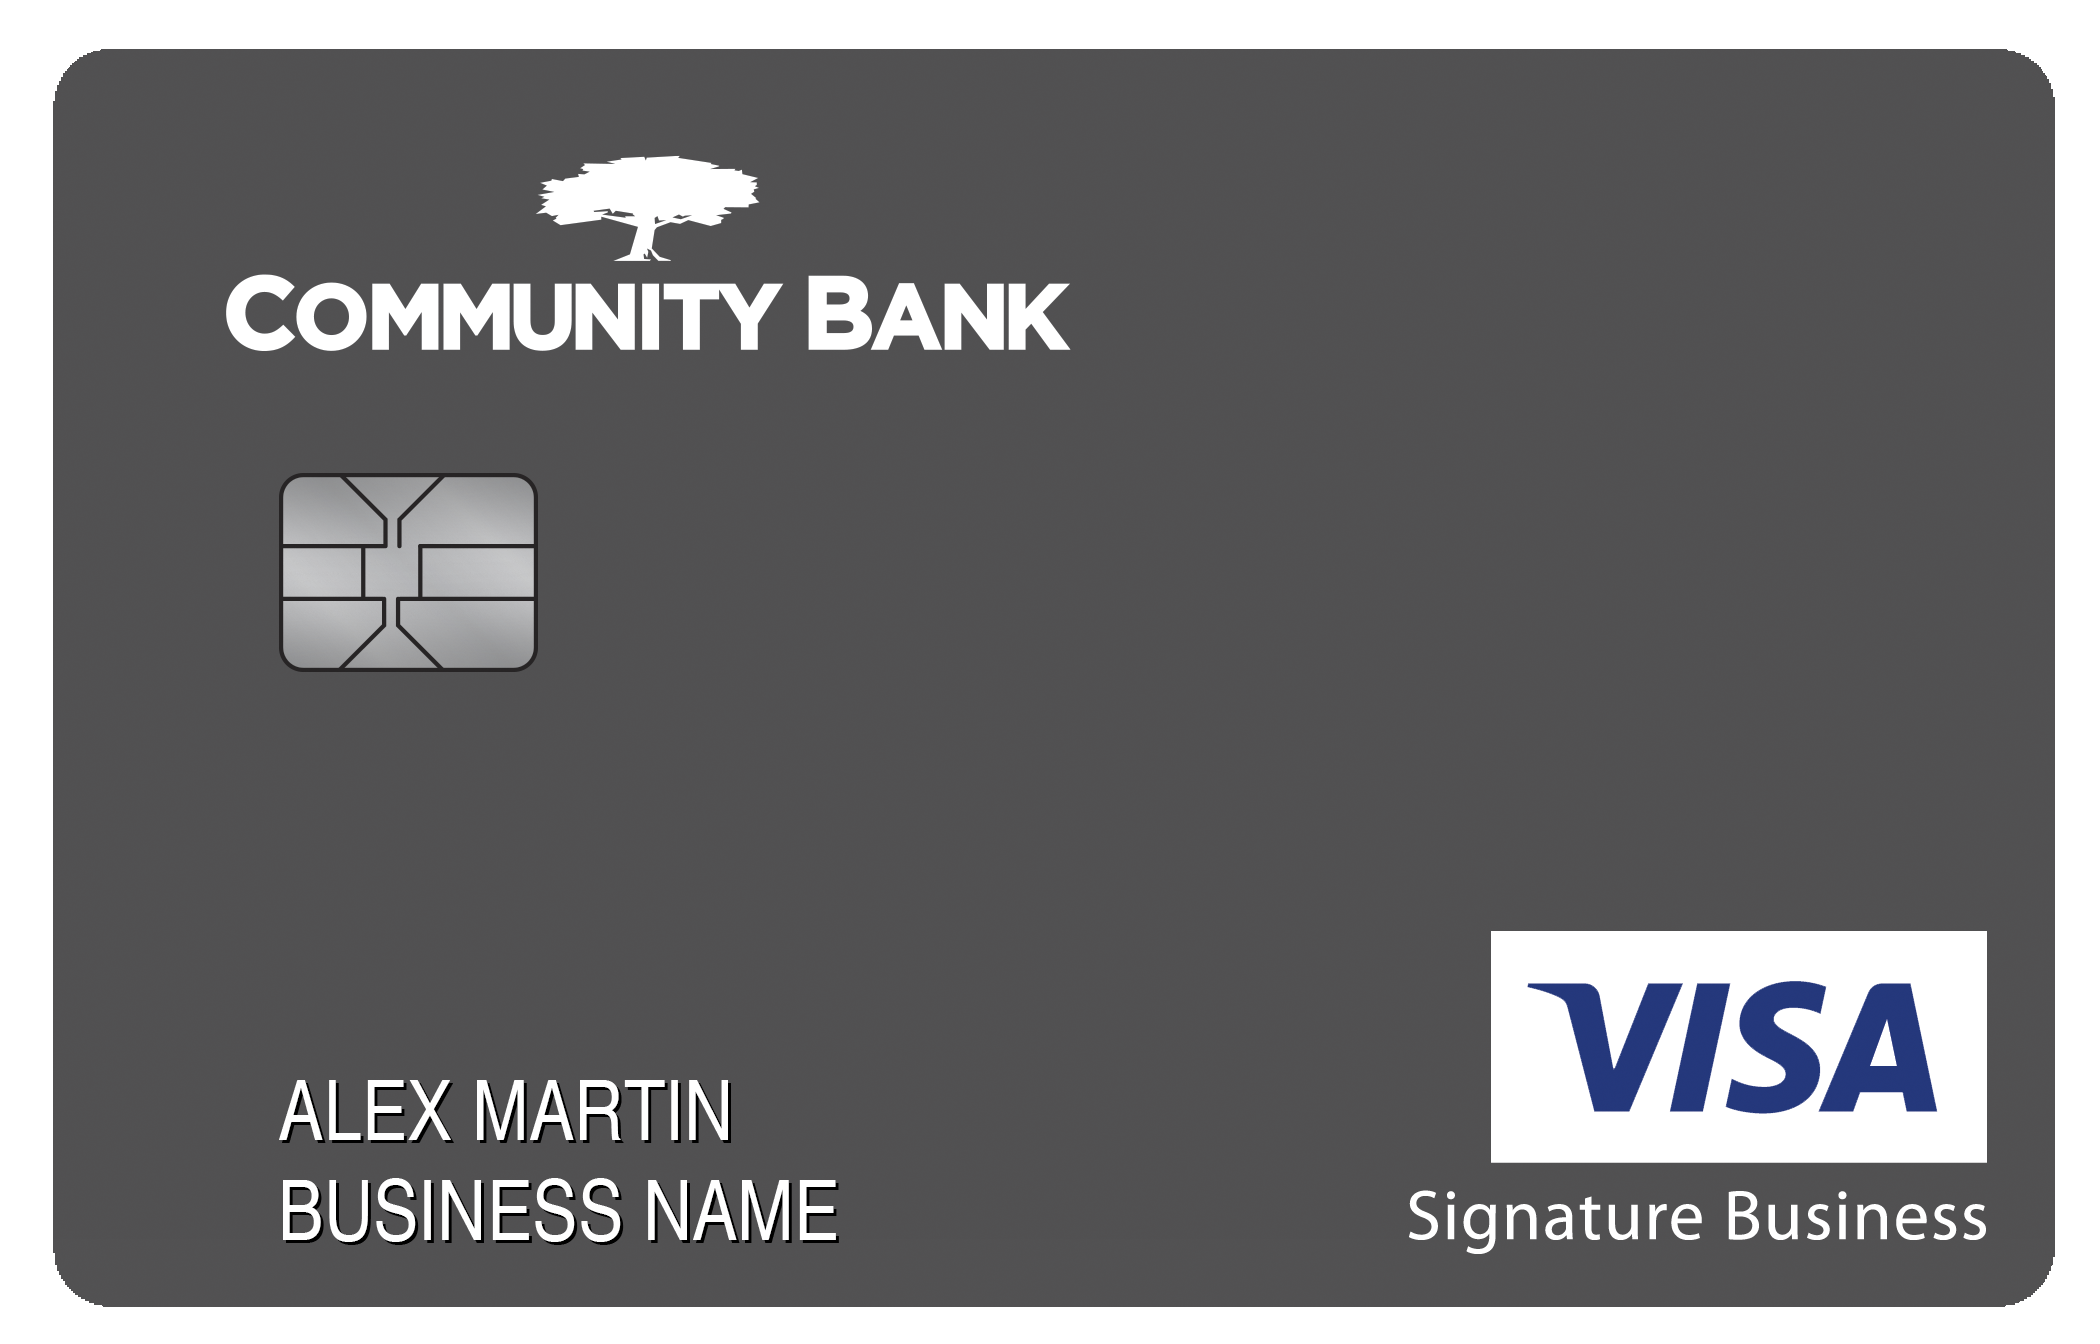 Community Bank Smart Business Rewards Card